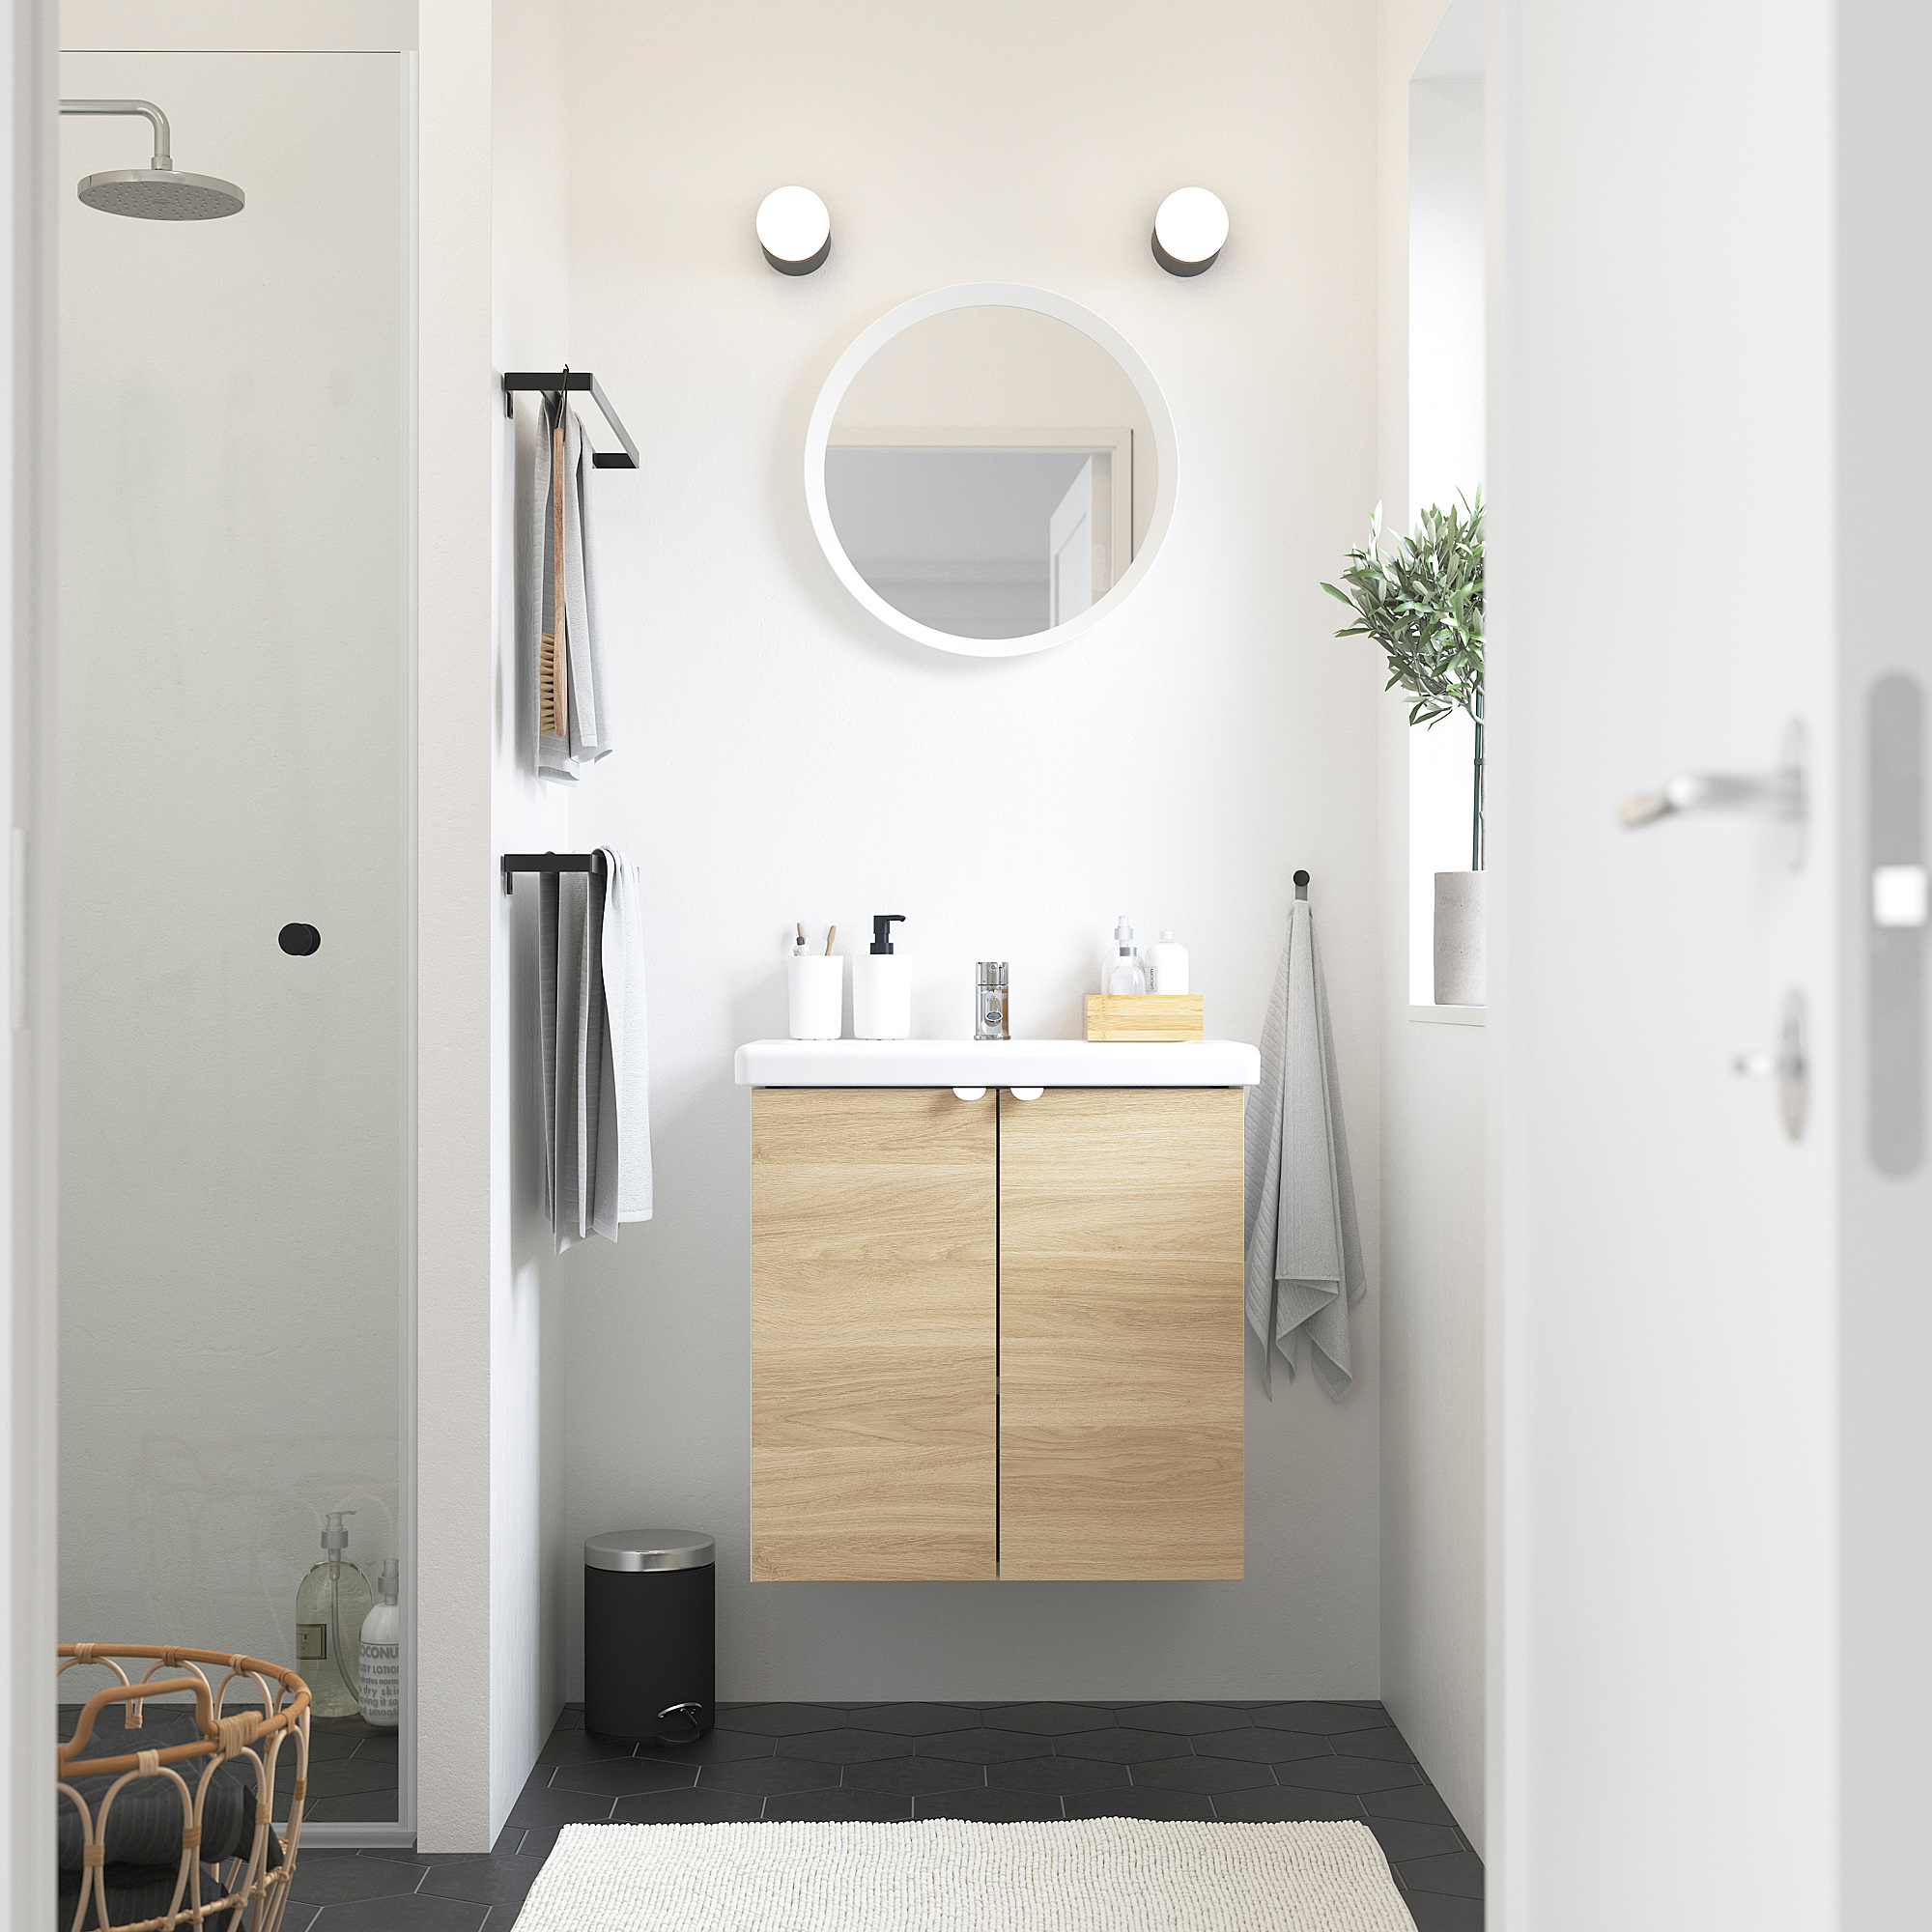 ENHET/TVÄLLEN wash-stnd w doors/wash-basin/tap